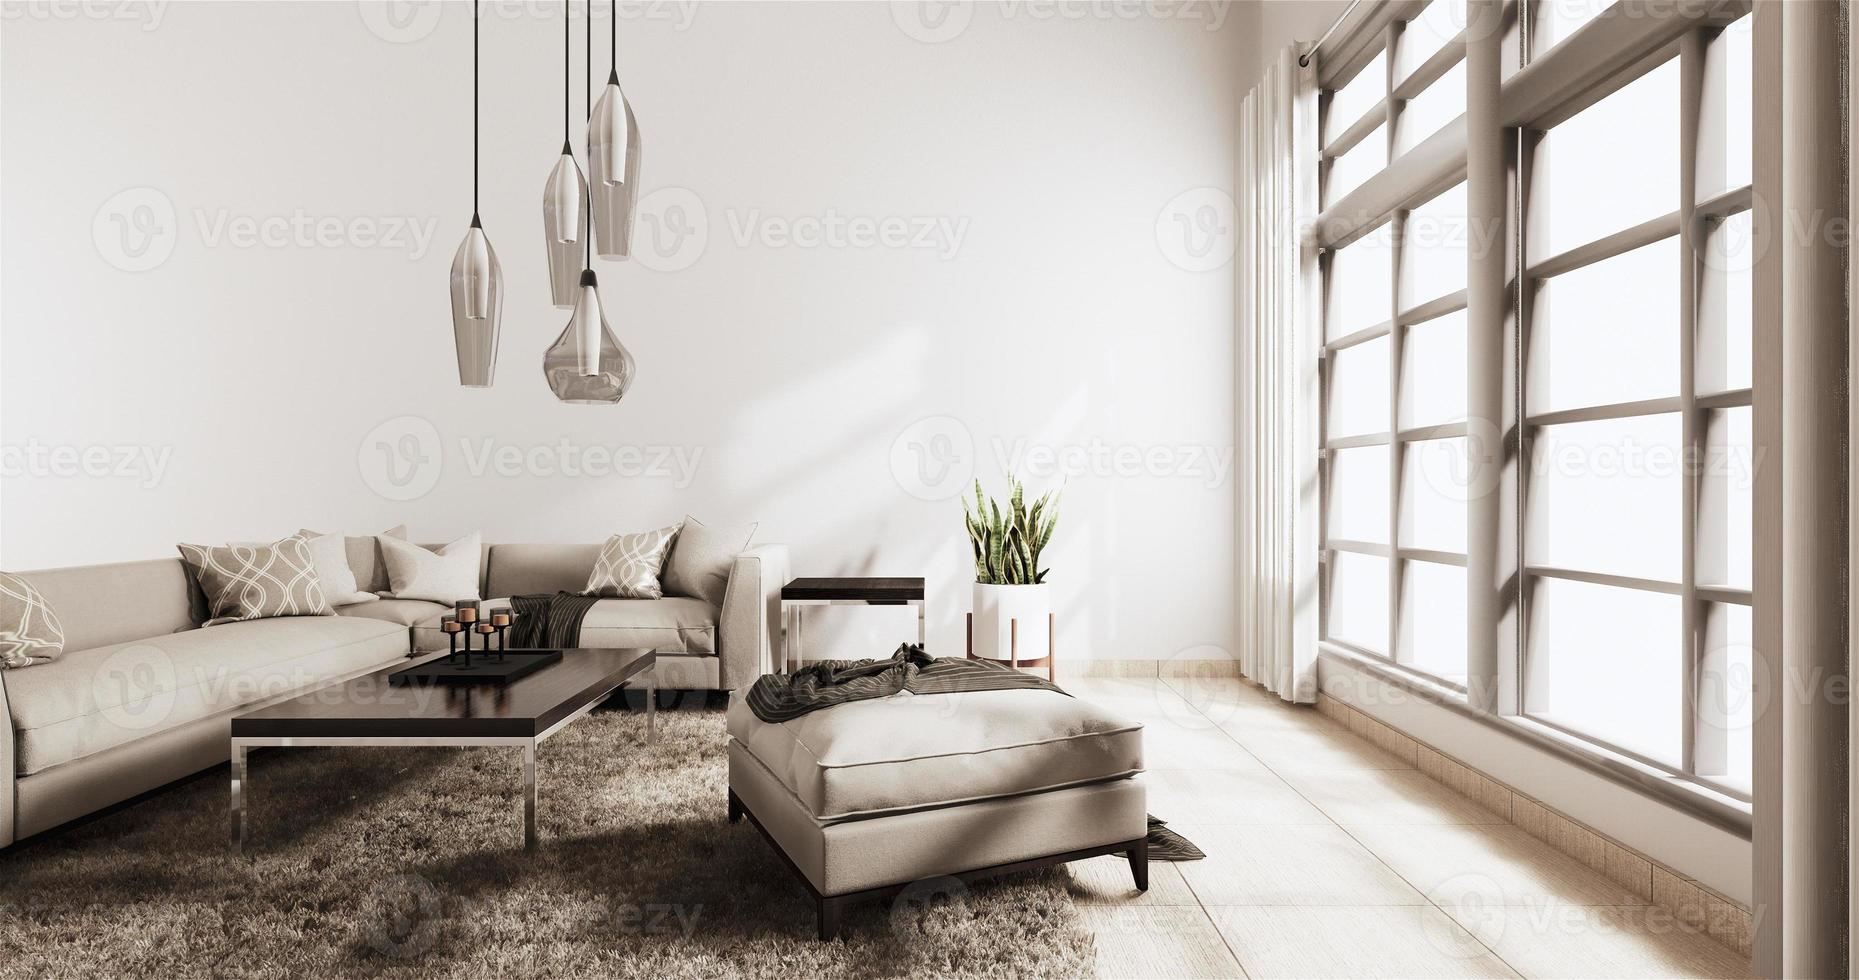 Sala de estar de estilo moderno con pared blanca sobre piso de madera y sillón sofá en alfombra. Representación 3D foto